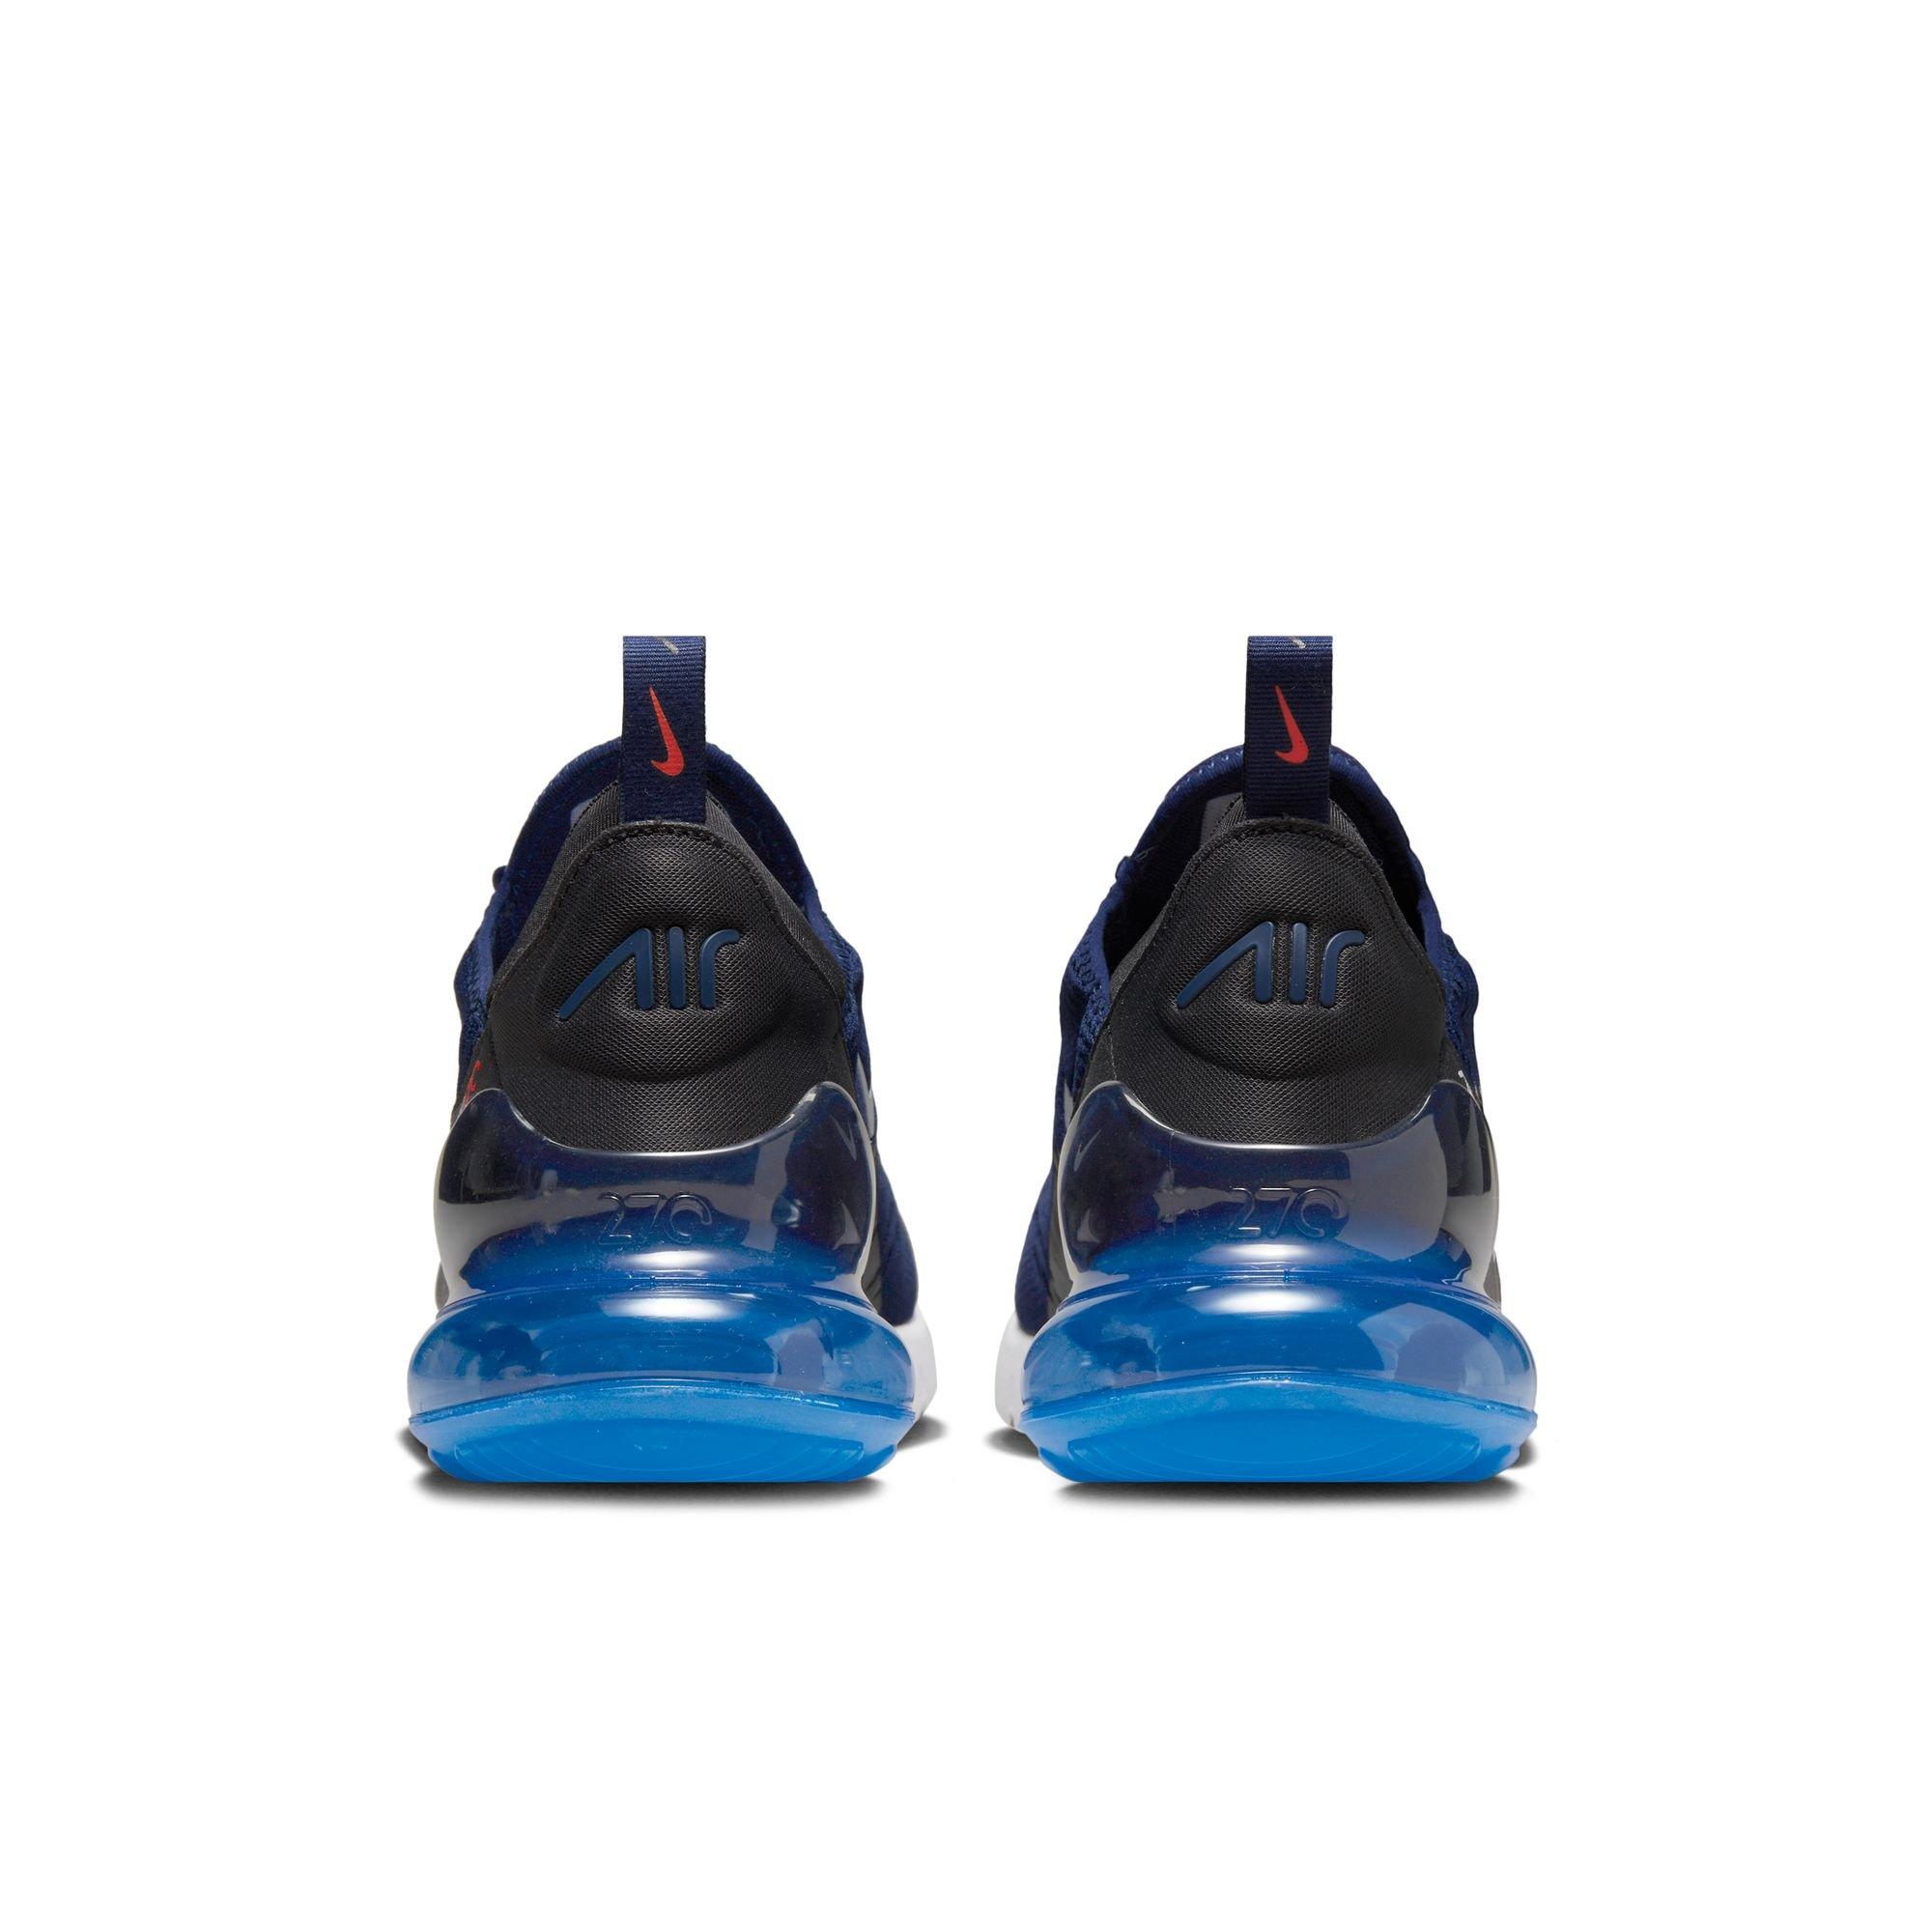  Nike Men's Shoes Air Max 270 Black Astronomy Blue